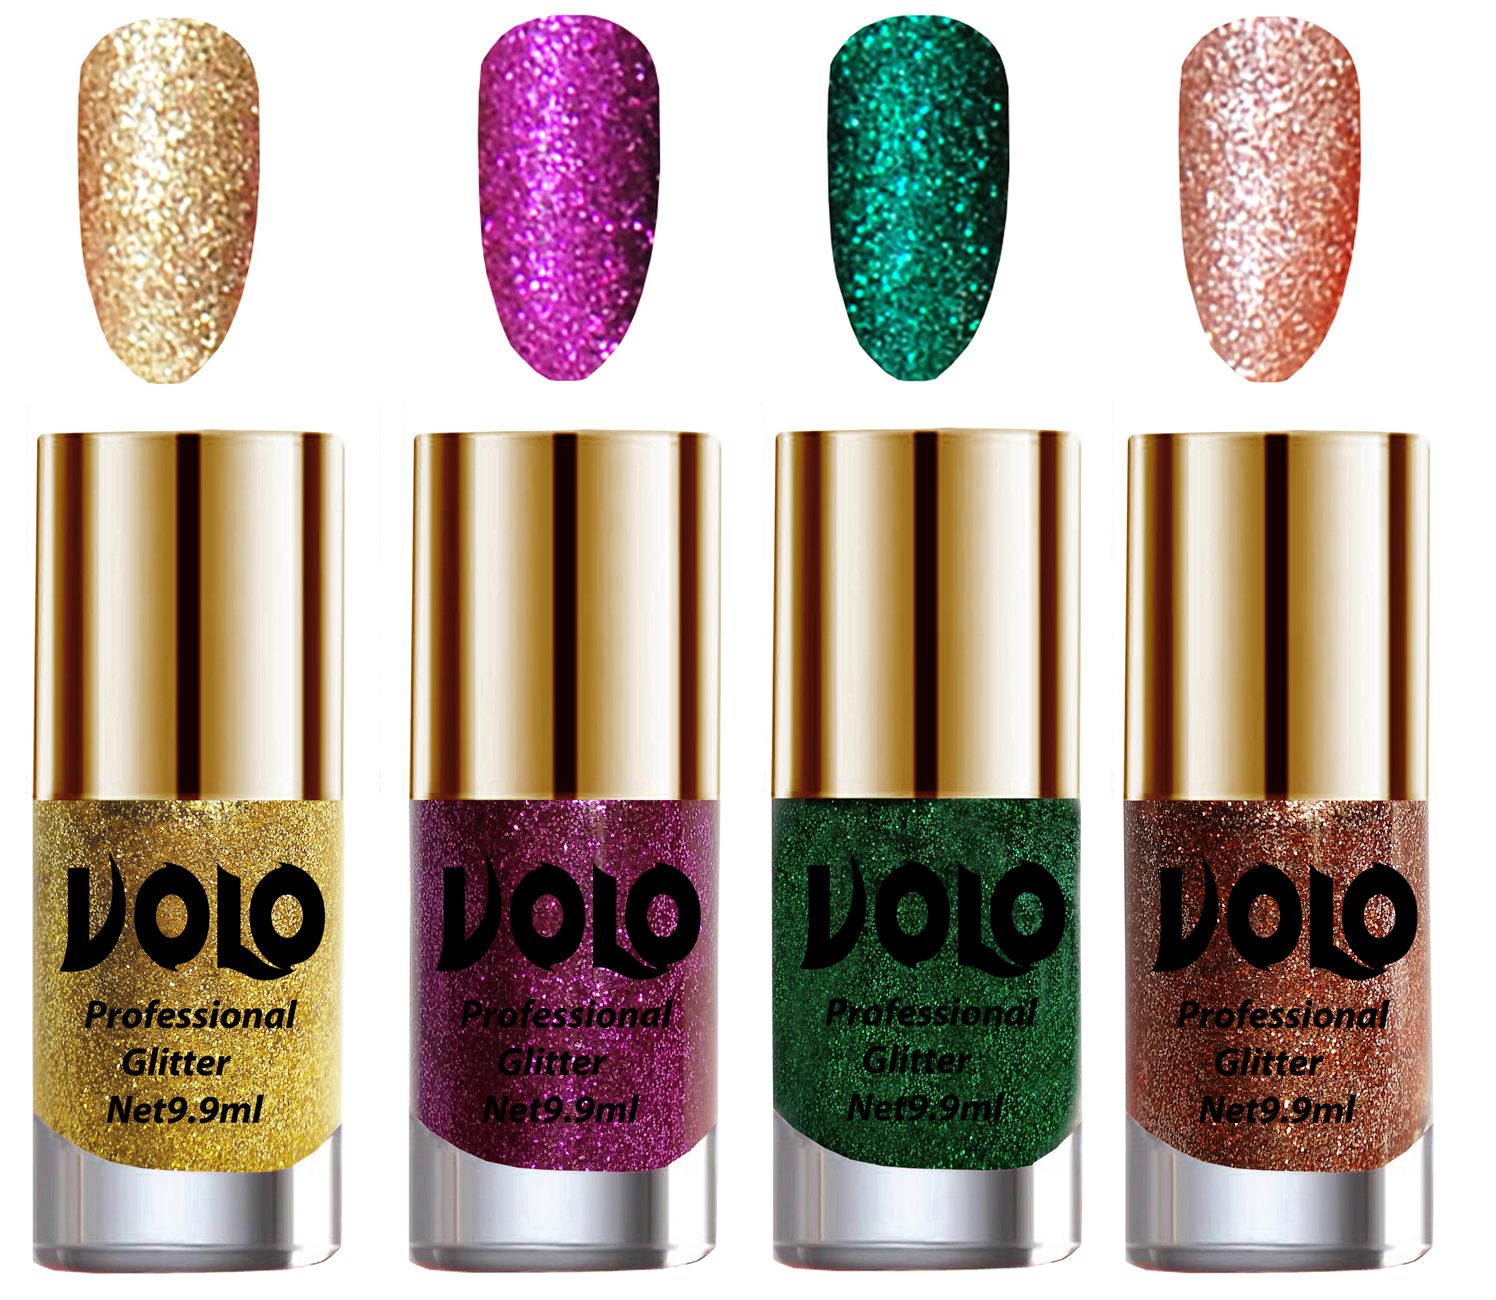     			VOLO Professionally Used Glitter Shine Nail Polish Gold,Purple,Green Pink Pack of 4 39 mL